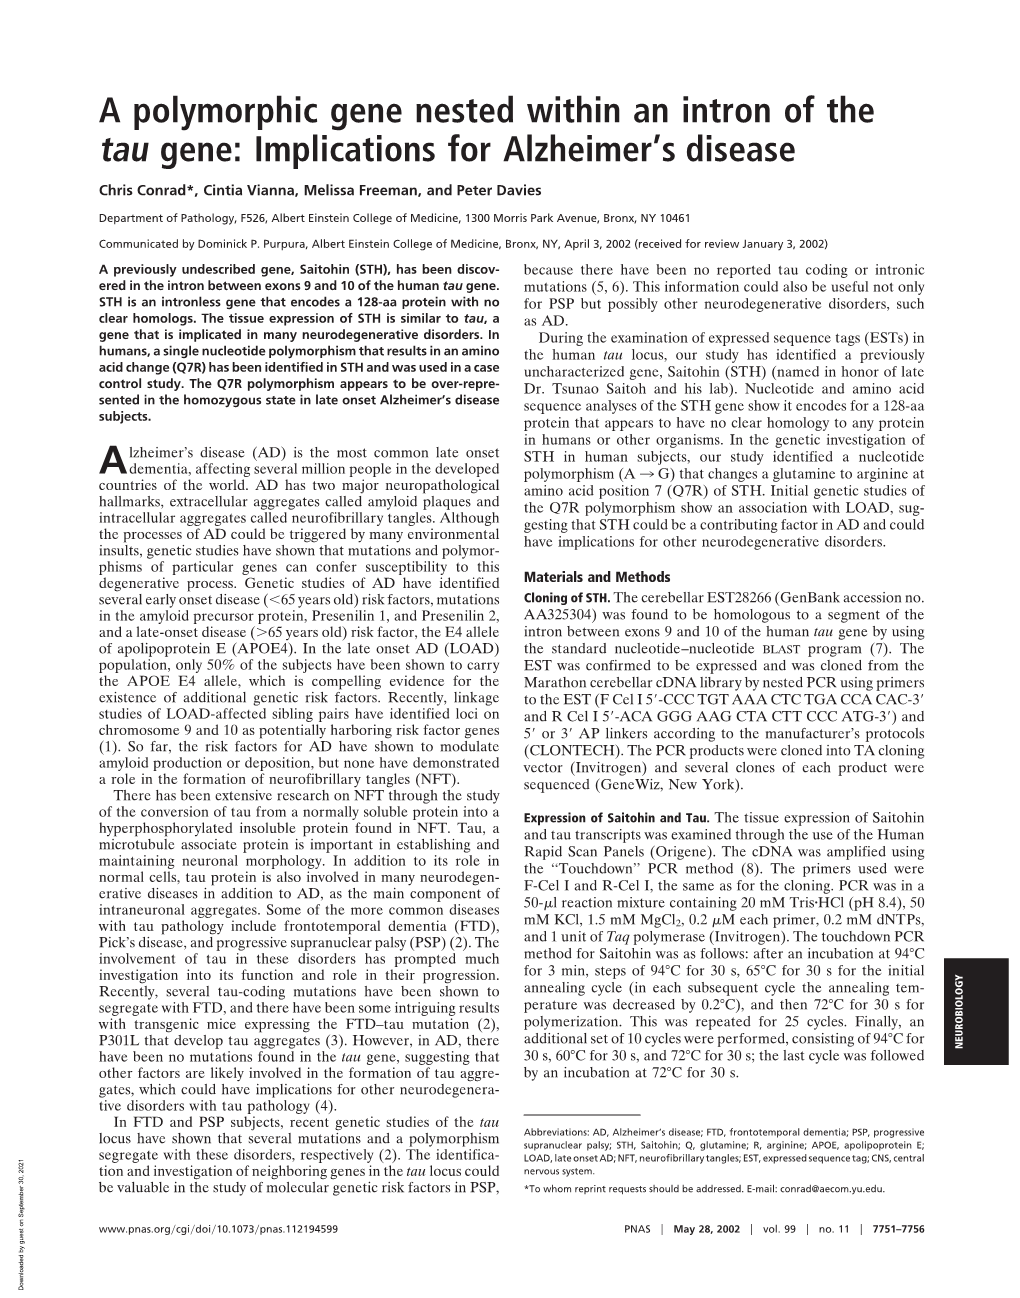 Implications for Alzheimer's Disease